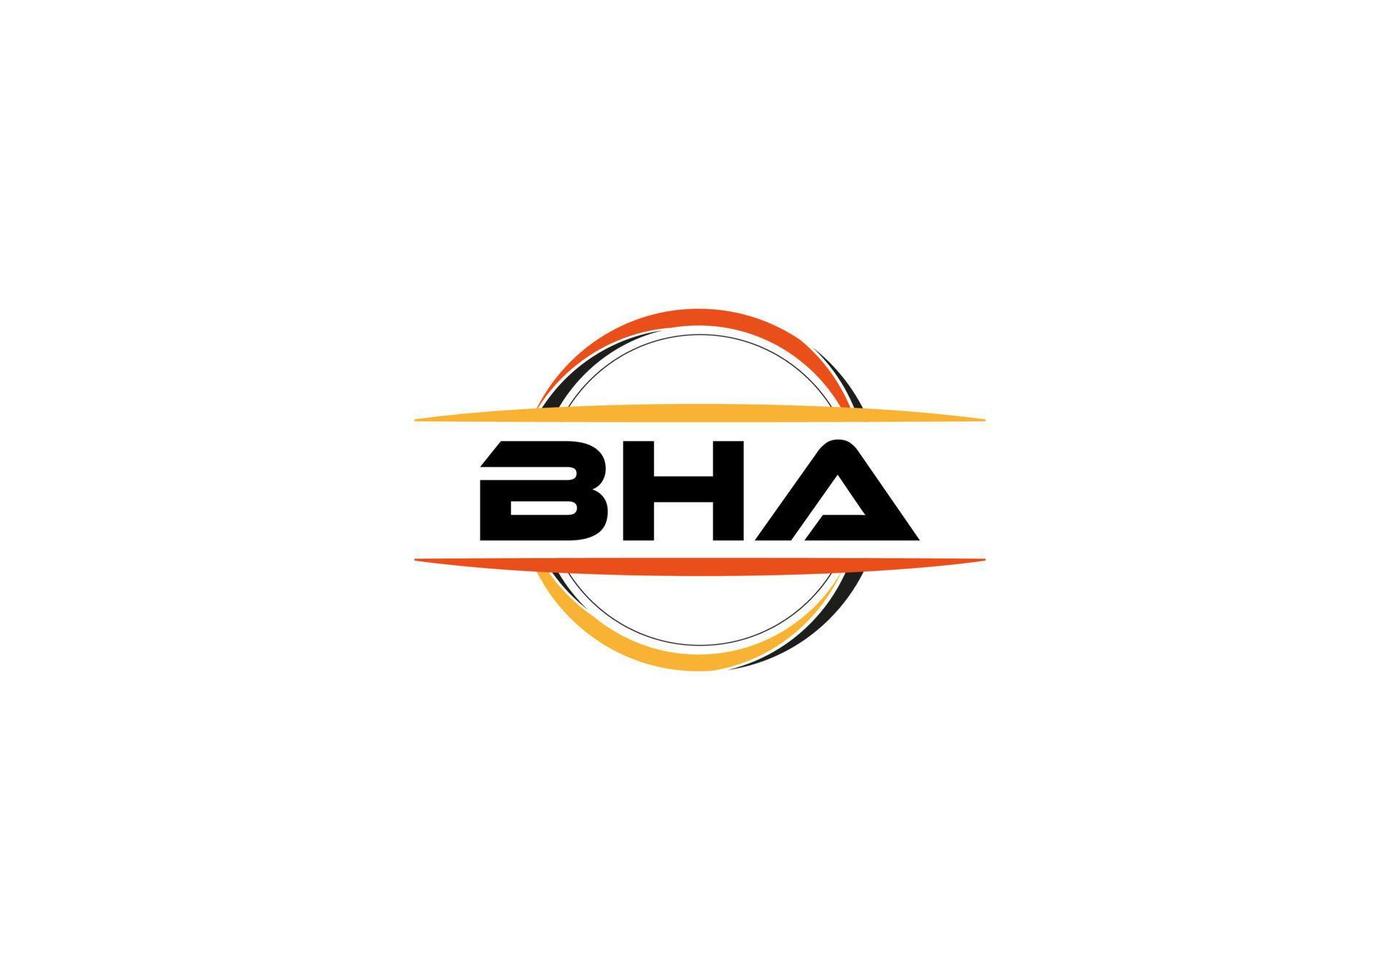 BHA letter royalty ellipse shape logo. BHA brush art logo. BHA logo for a company, business, and commercial use. vector